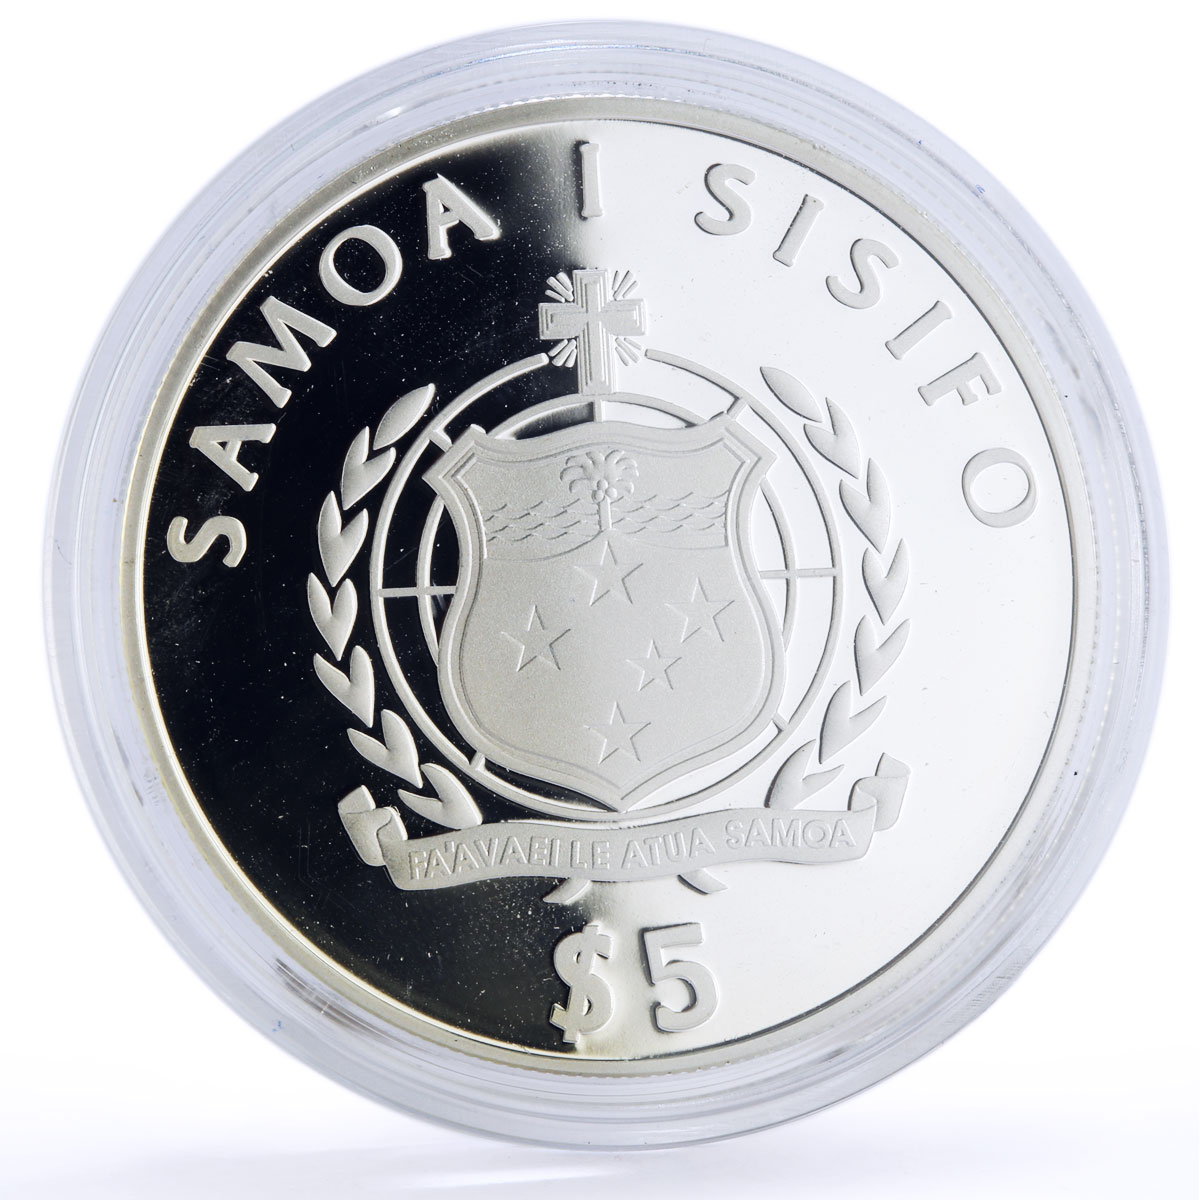 Samoa 5 dollars Seafaring SMS Bismarck Ship Clipper proof silver coin 2008